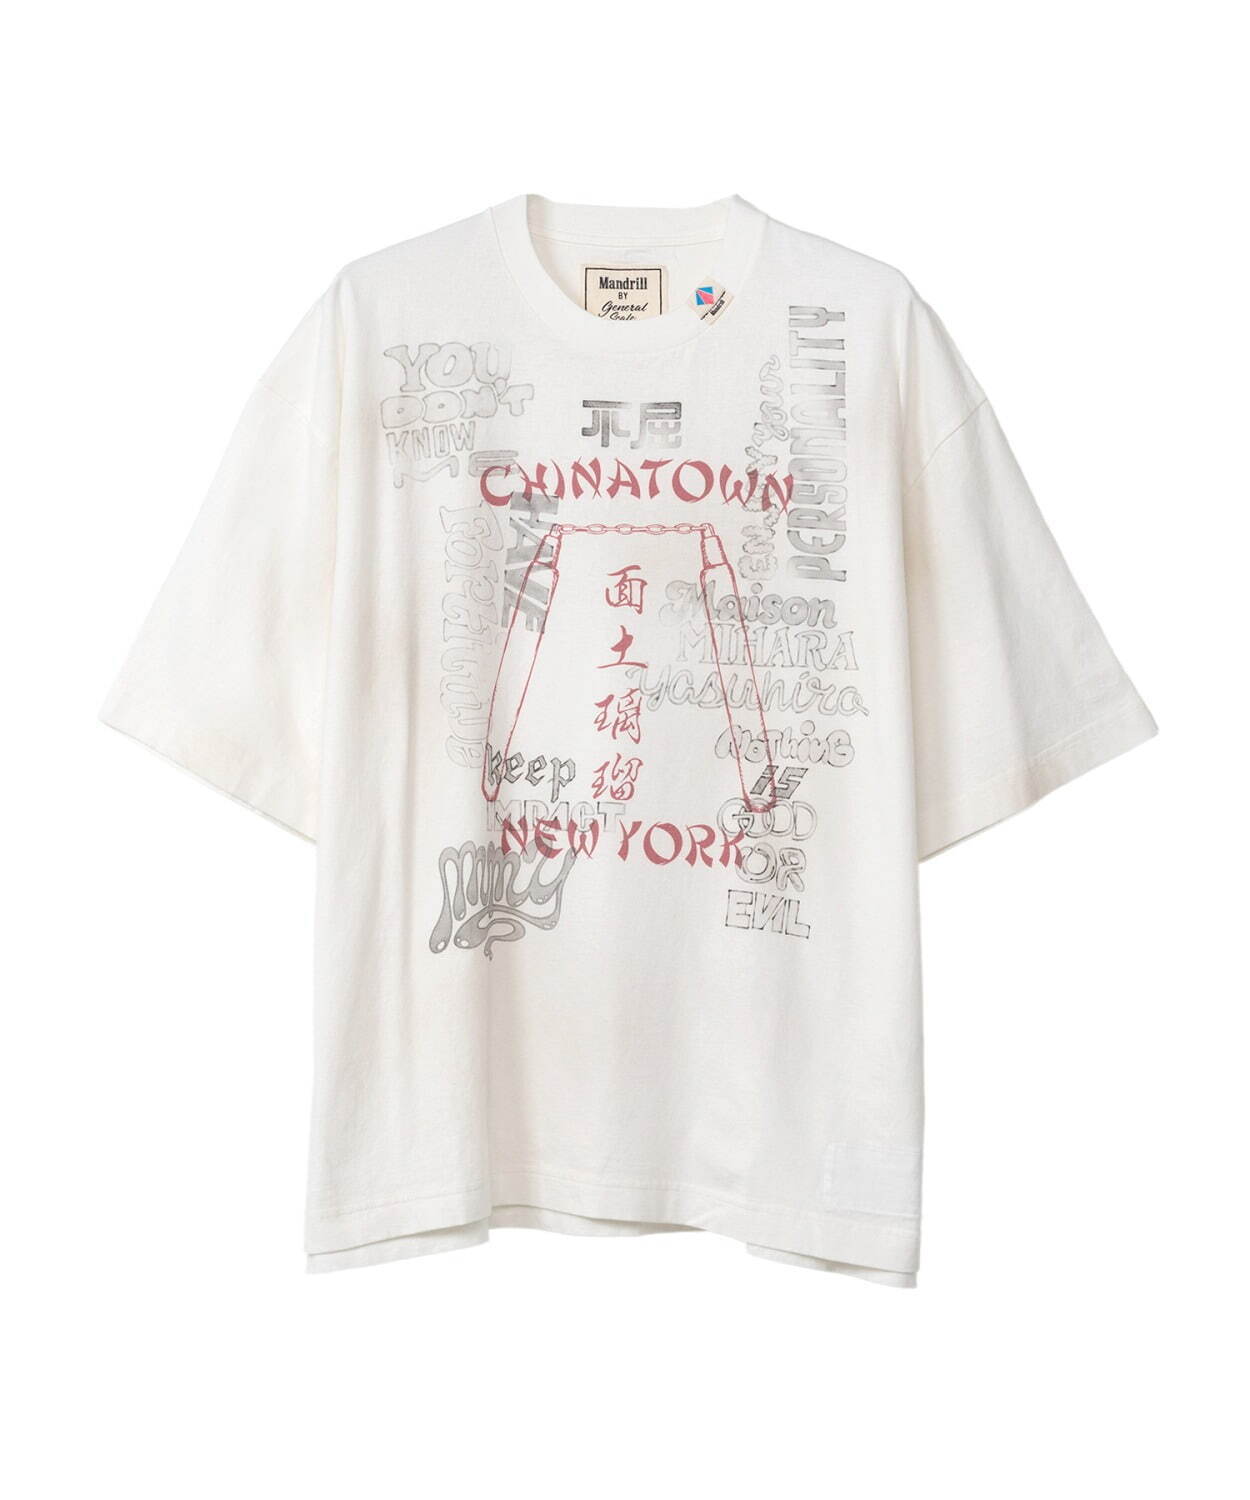 Tシャツ 22,000円